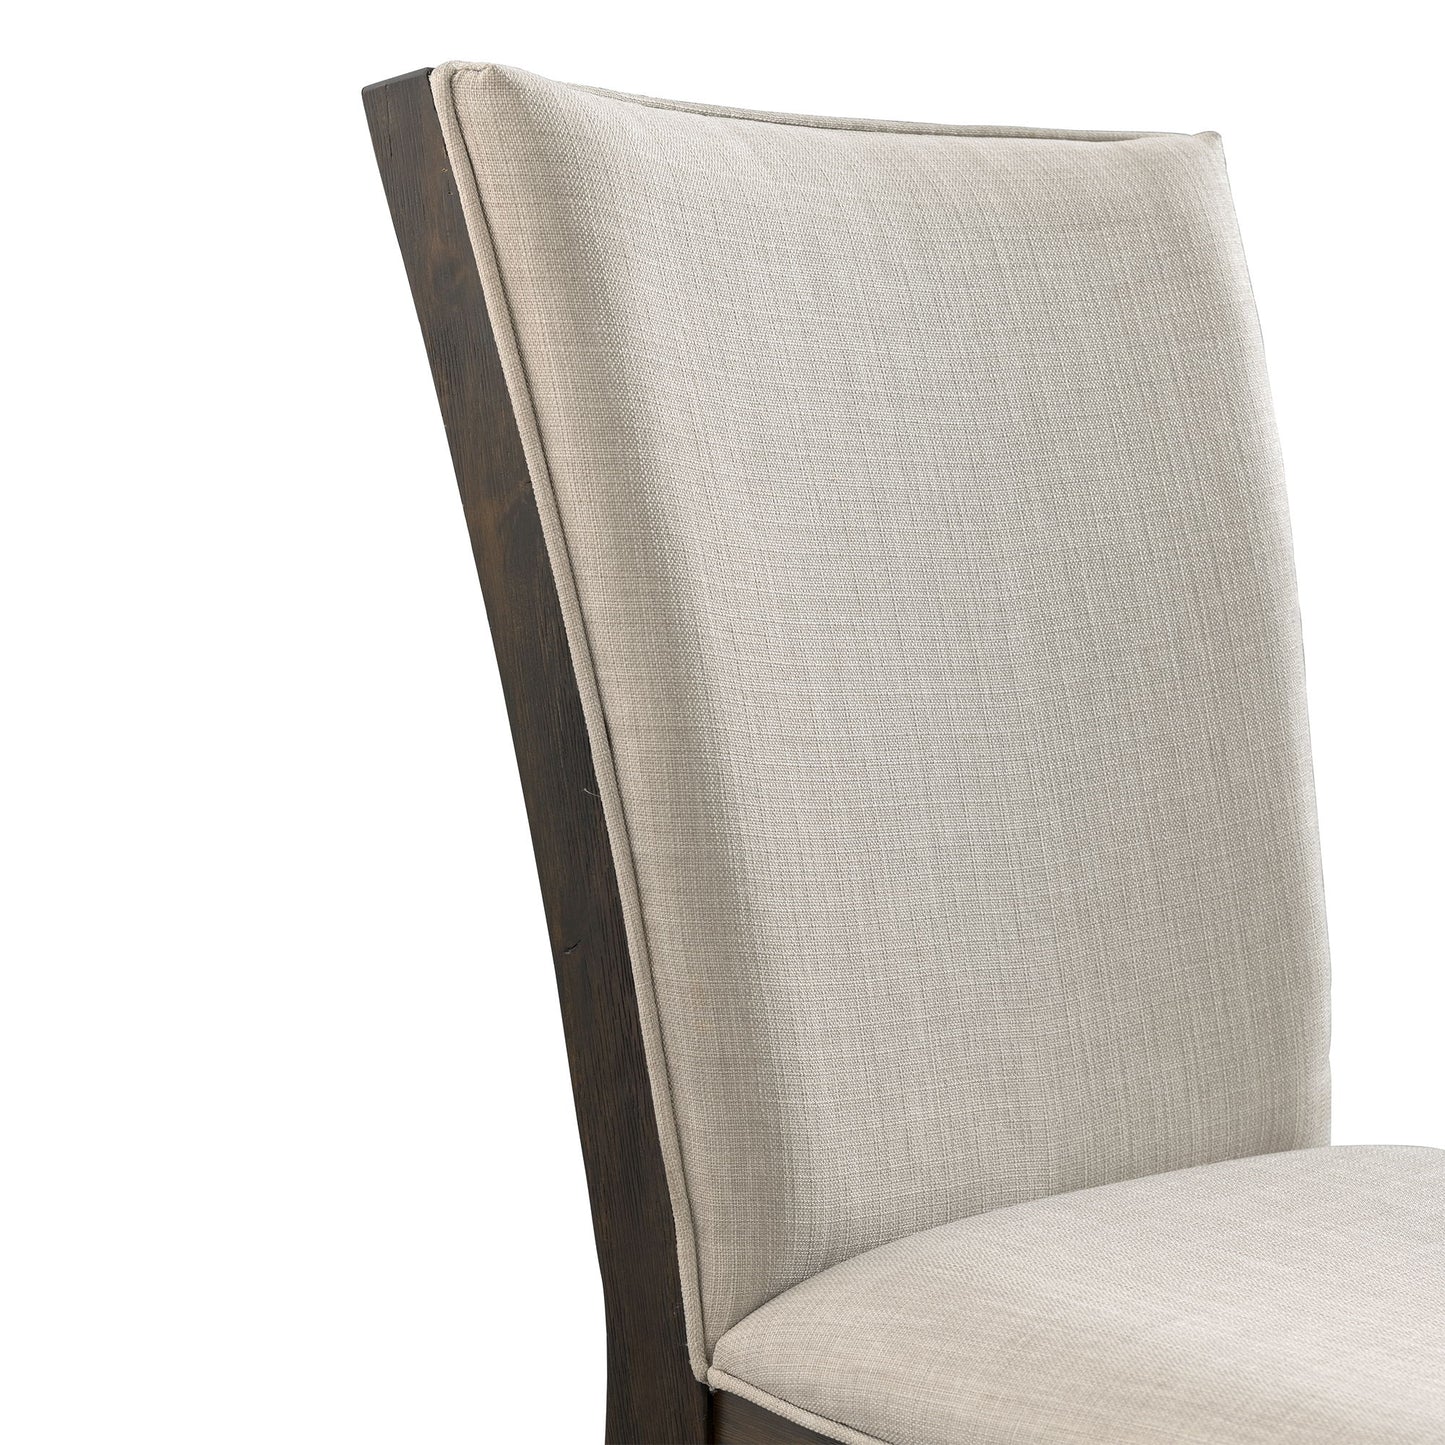 Grady - Upholstered Side Chair (Set of 2) - Walnut